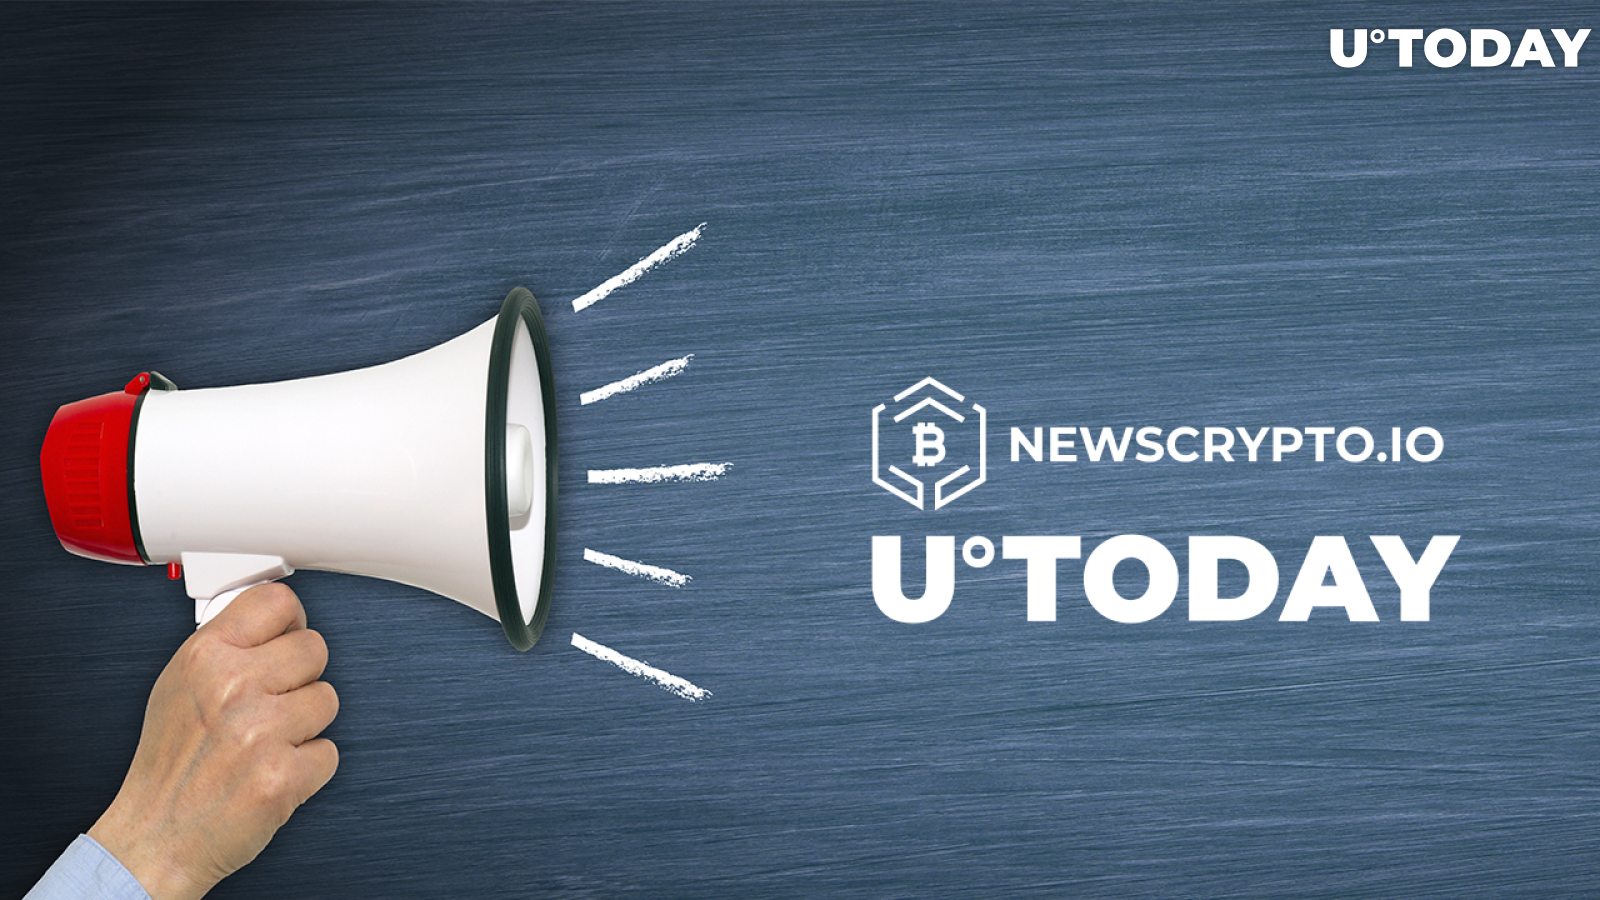 U.Today News Now Available on Newscrypto.io